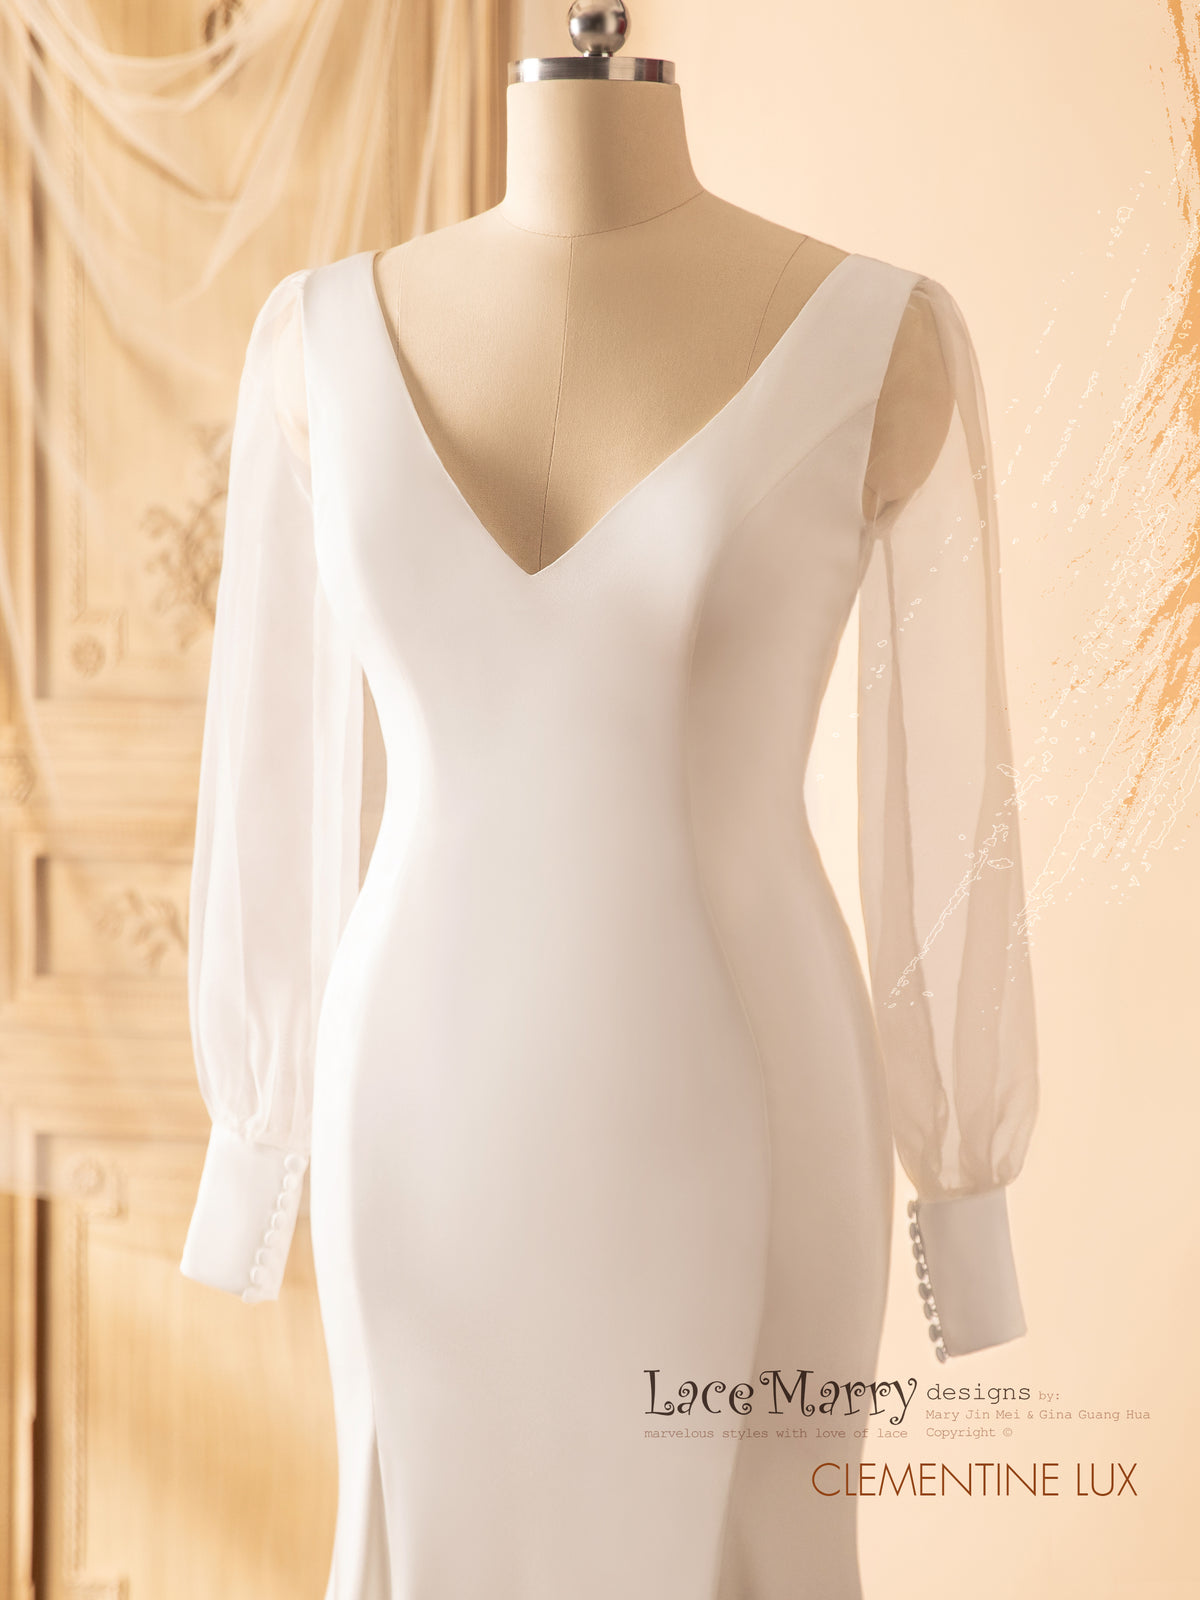 CLEMENTINE LUX / Elegant Wedding Dress with Long Sheer Sleeves